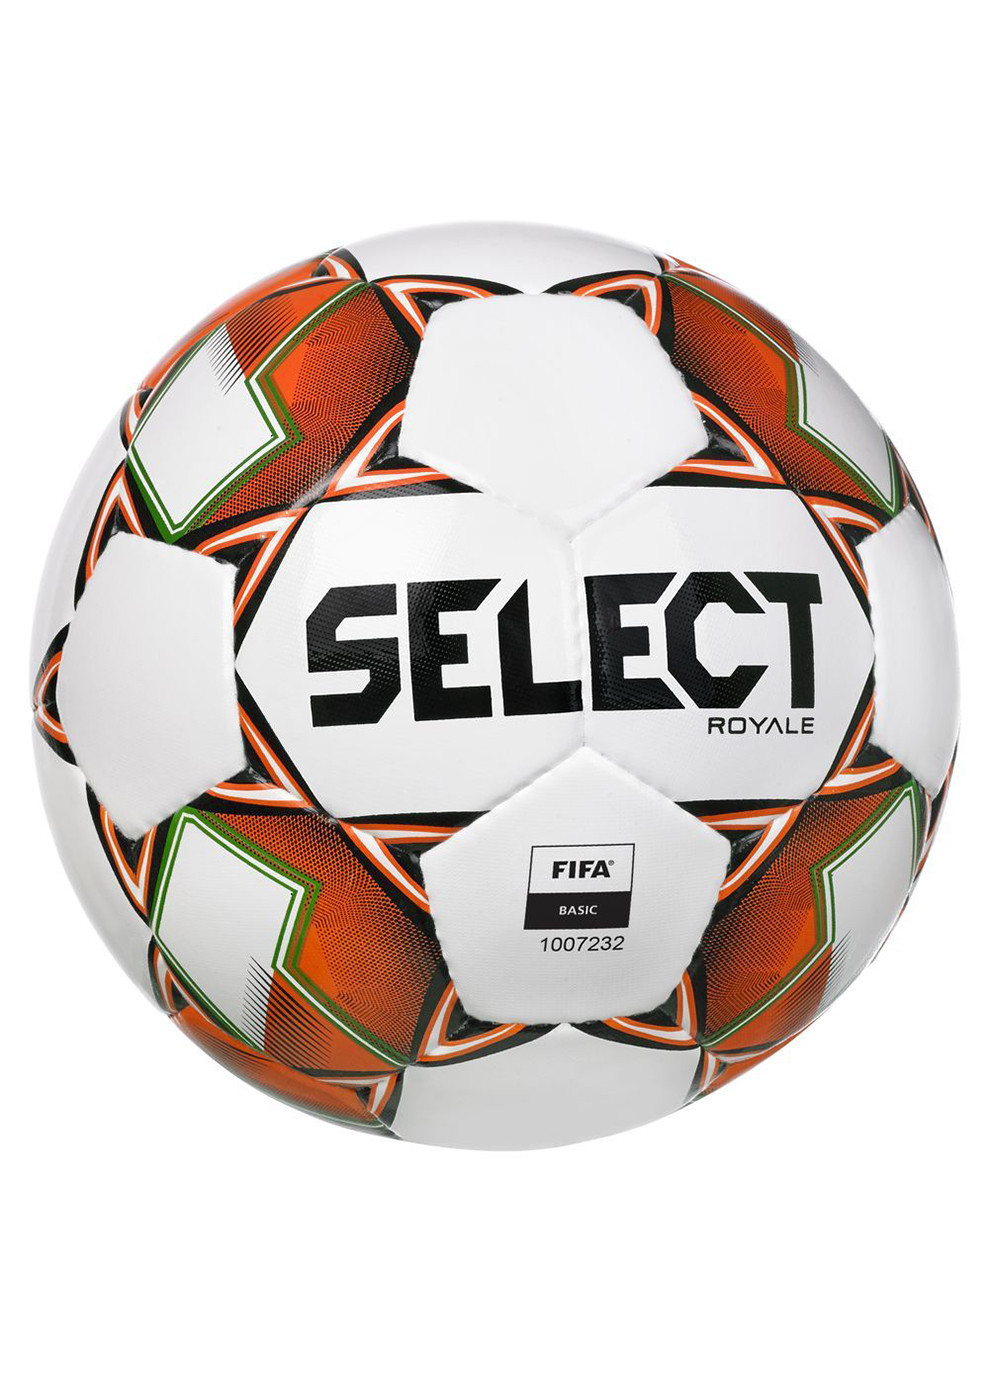 М'яч футбольний Royale FIFA Basic v22 білий/помаранчевий Уни 5 (022534-304-5) Select (254315234)